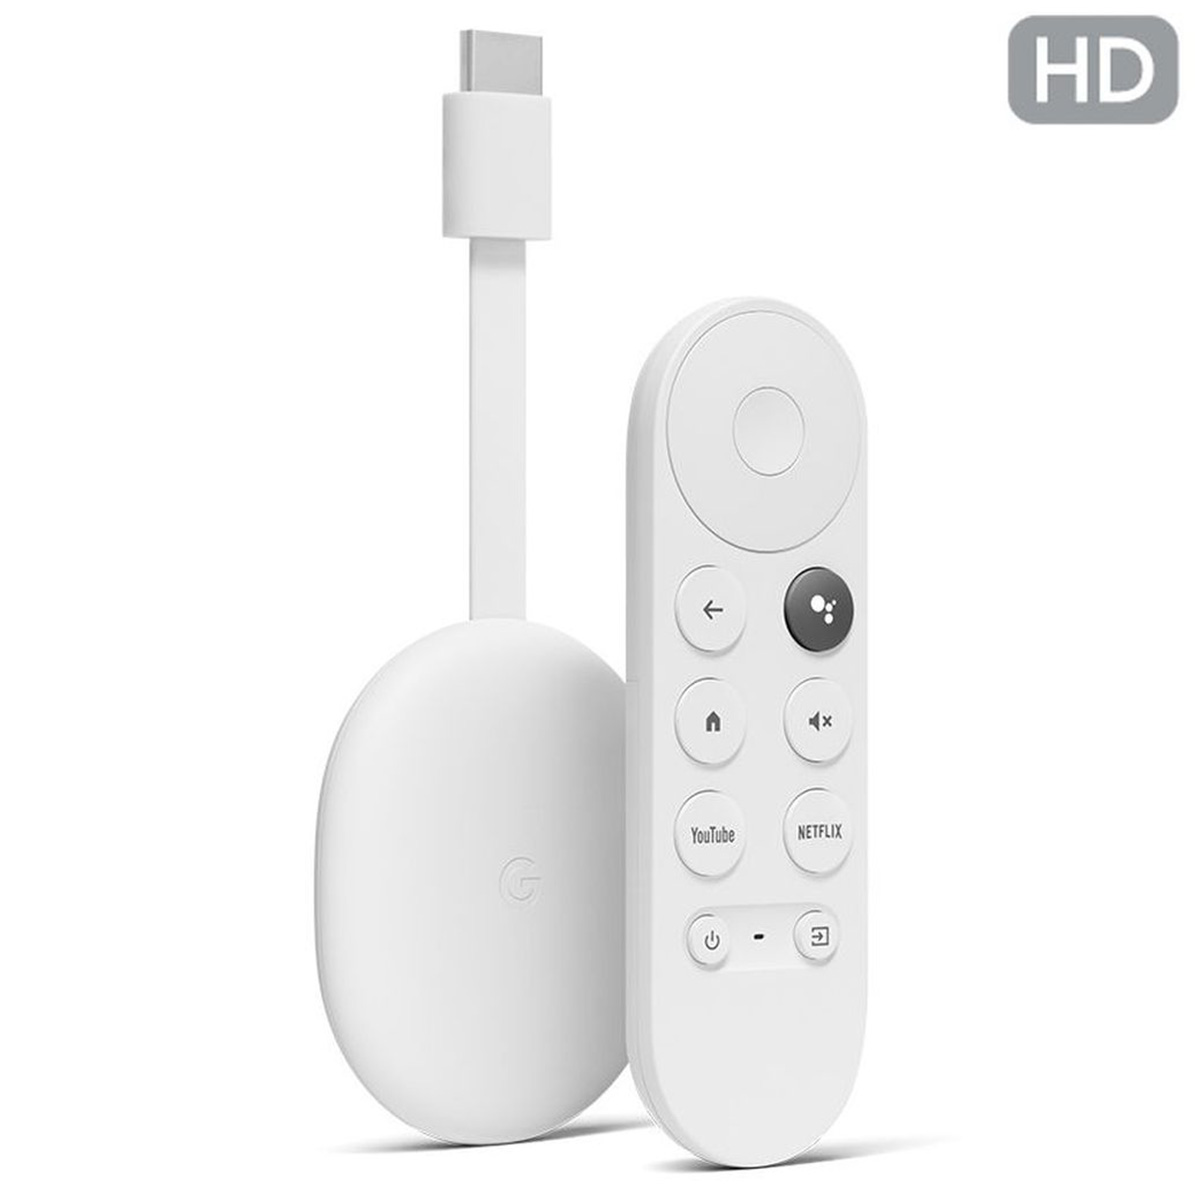 Google GA03131-JP WHITE　HD　Chromecast